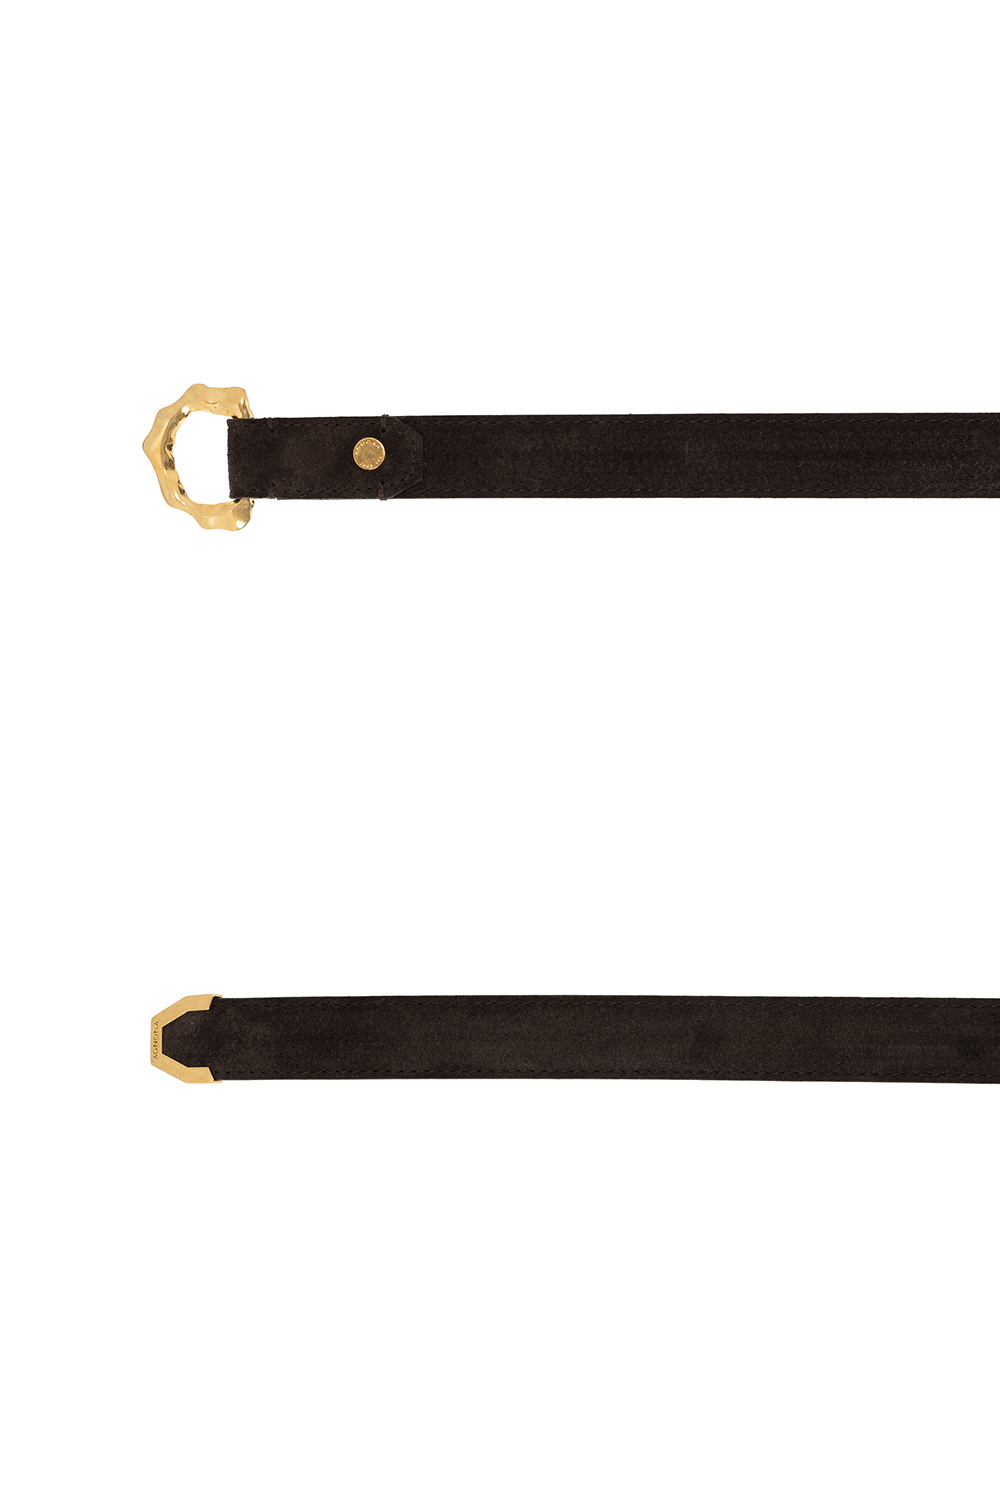 Agnona Leather belt